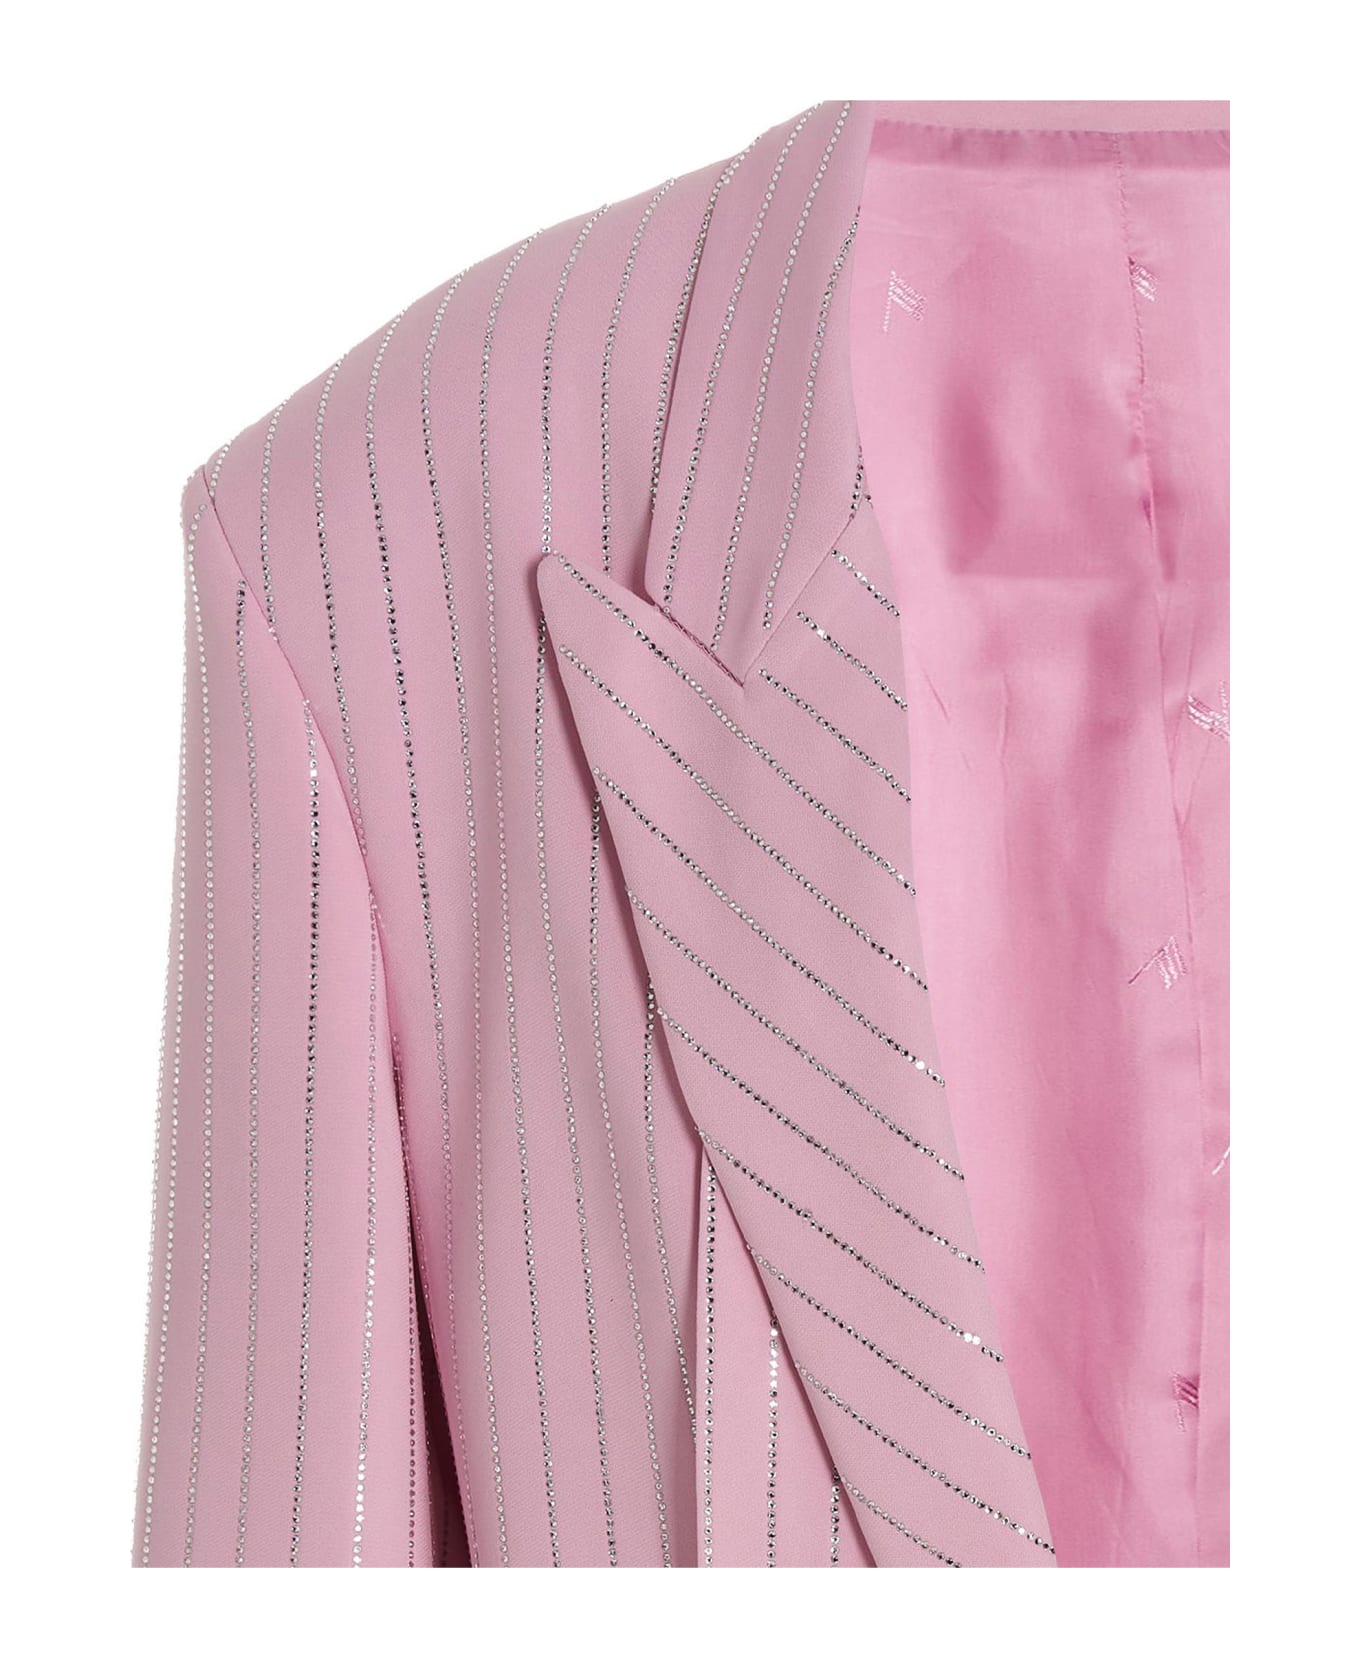 The Attico 'glen' Blazer Jacket - Pink ブレザー